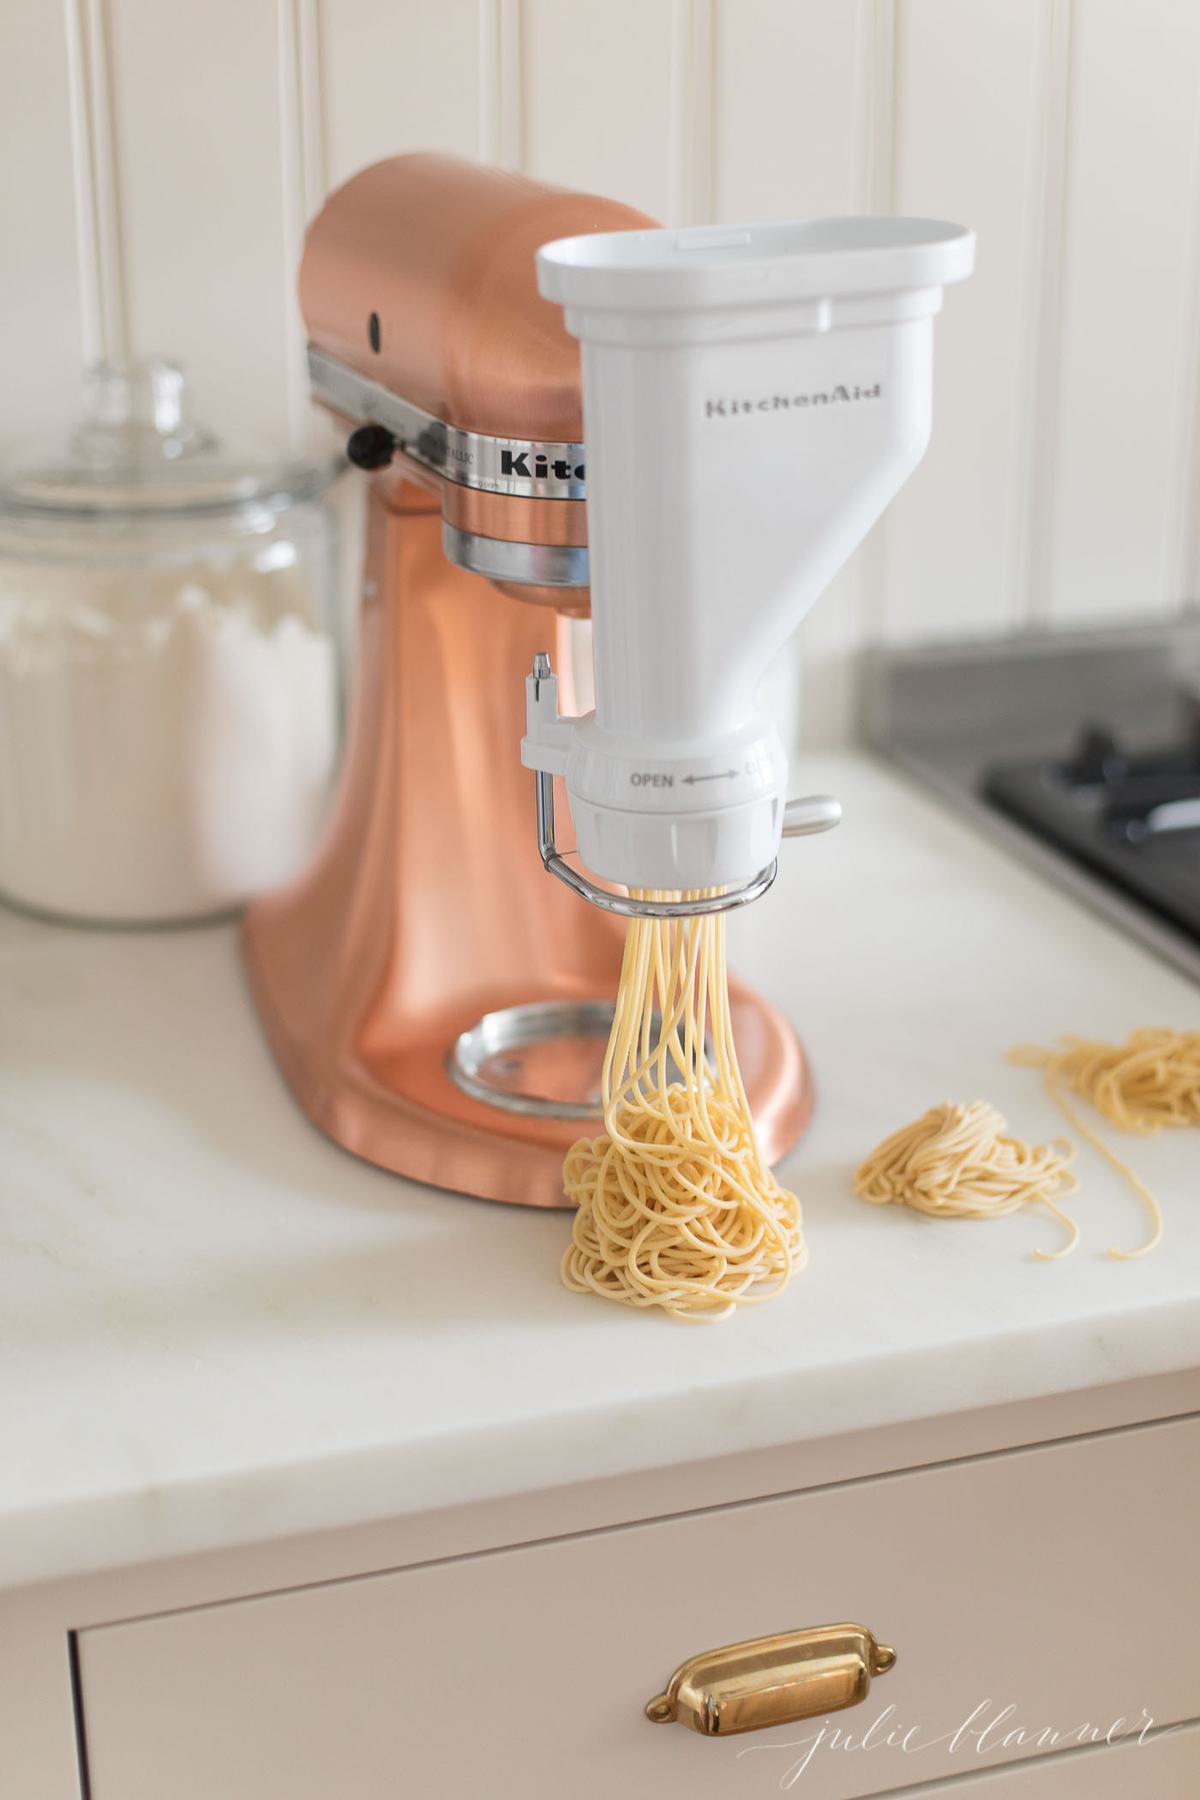 A copper Kitchenaid mixer with pasta attachment making egg noodles